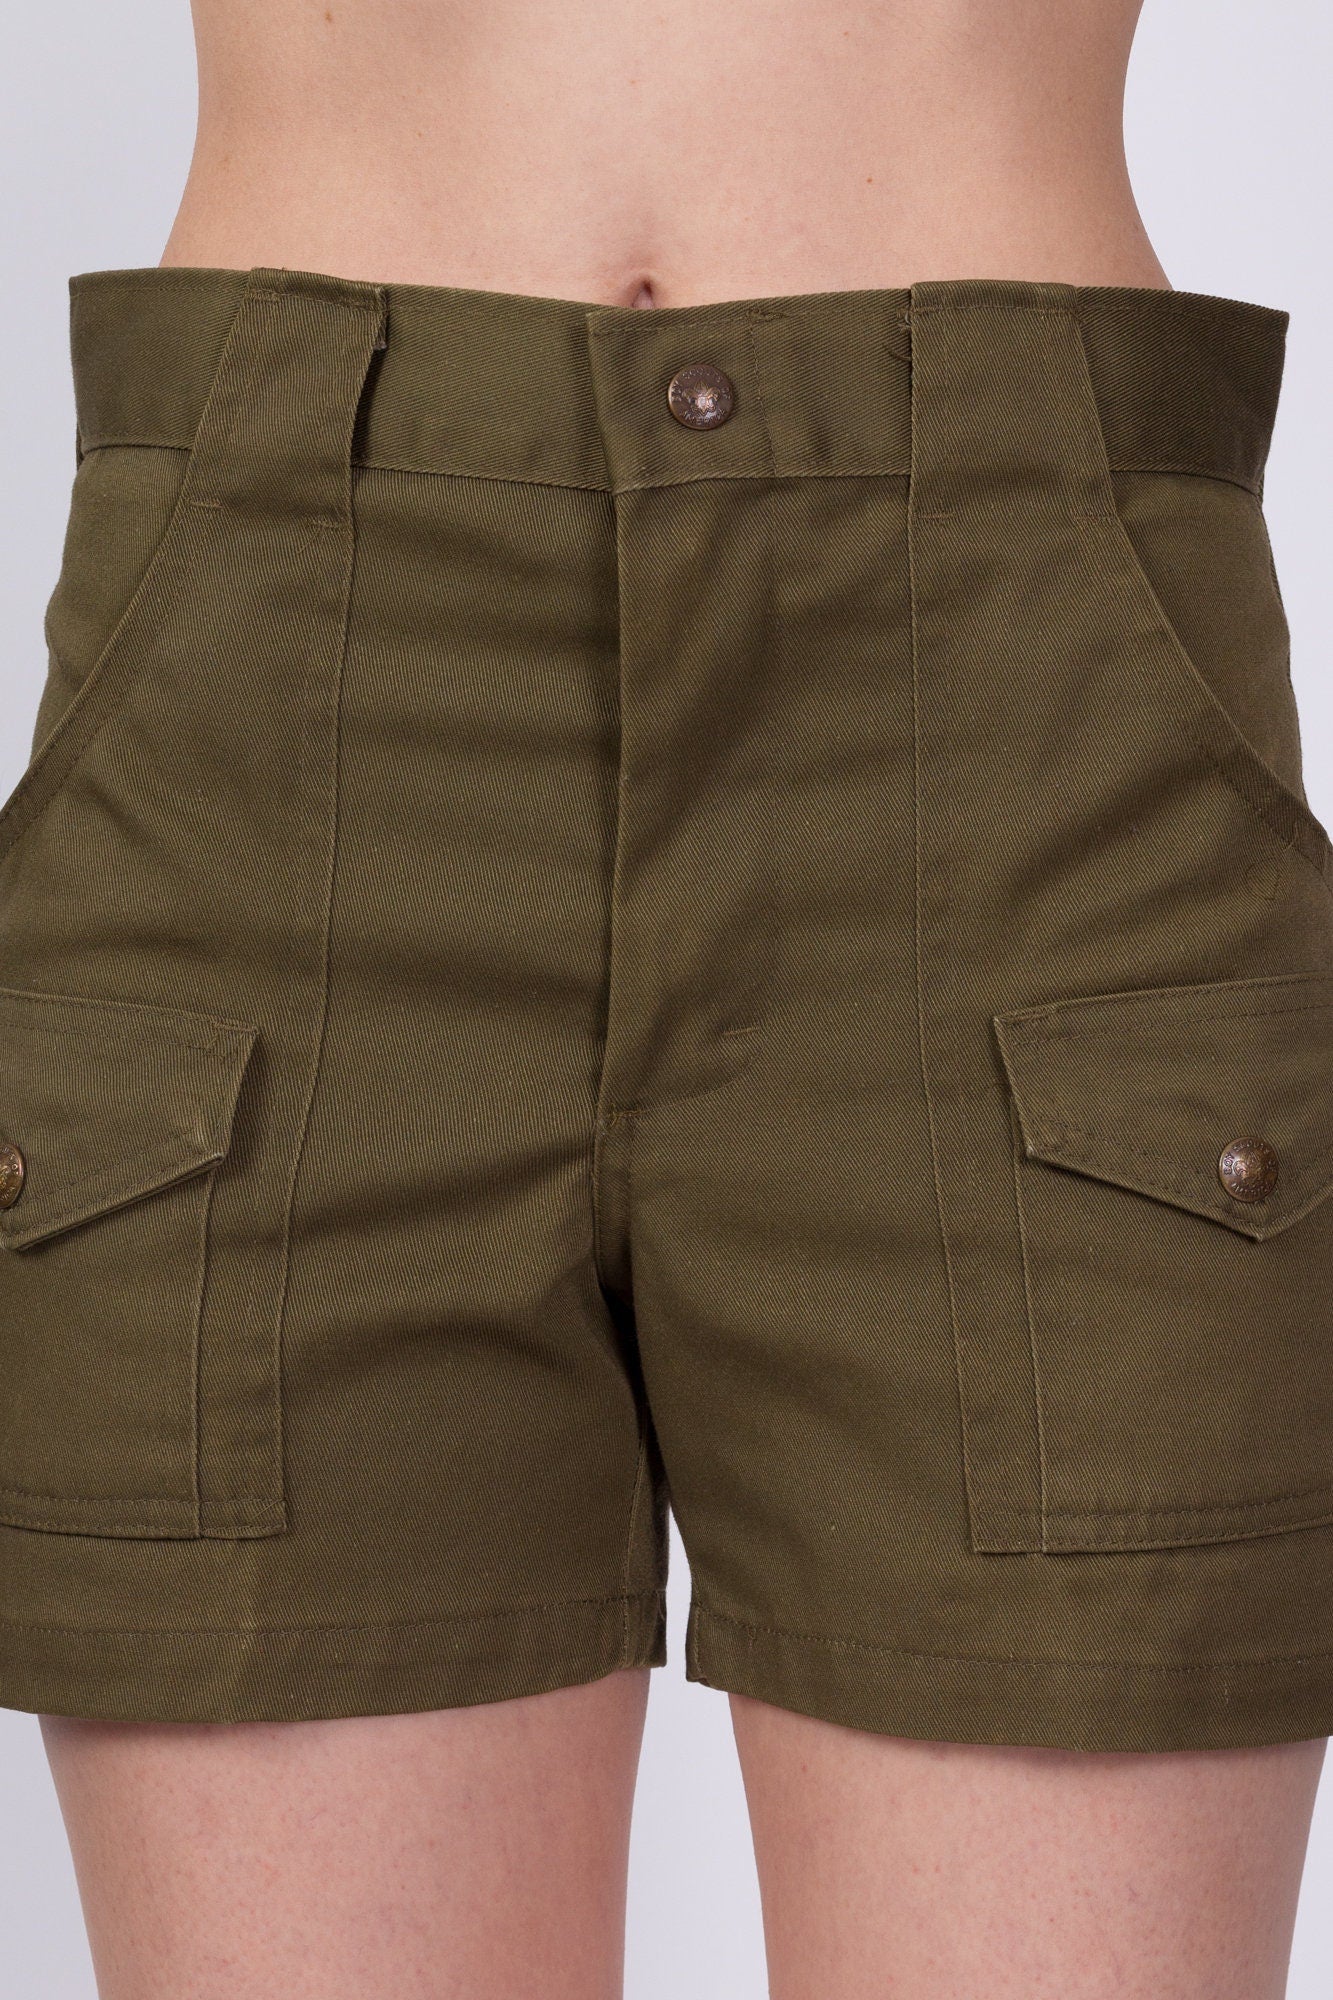 70s High Waist Boy Scout Uniform Shorts - XS to Small 